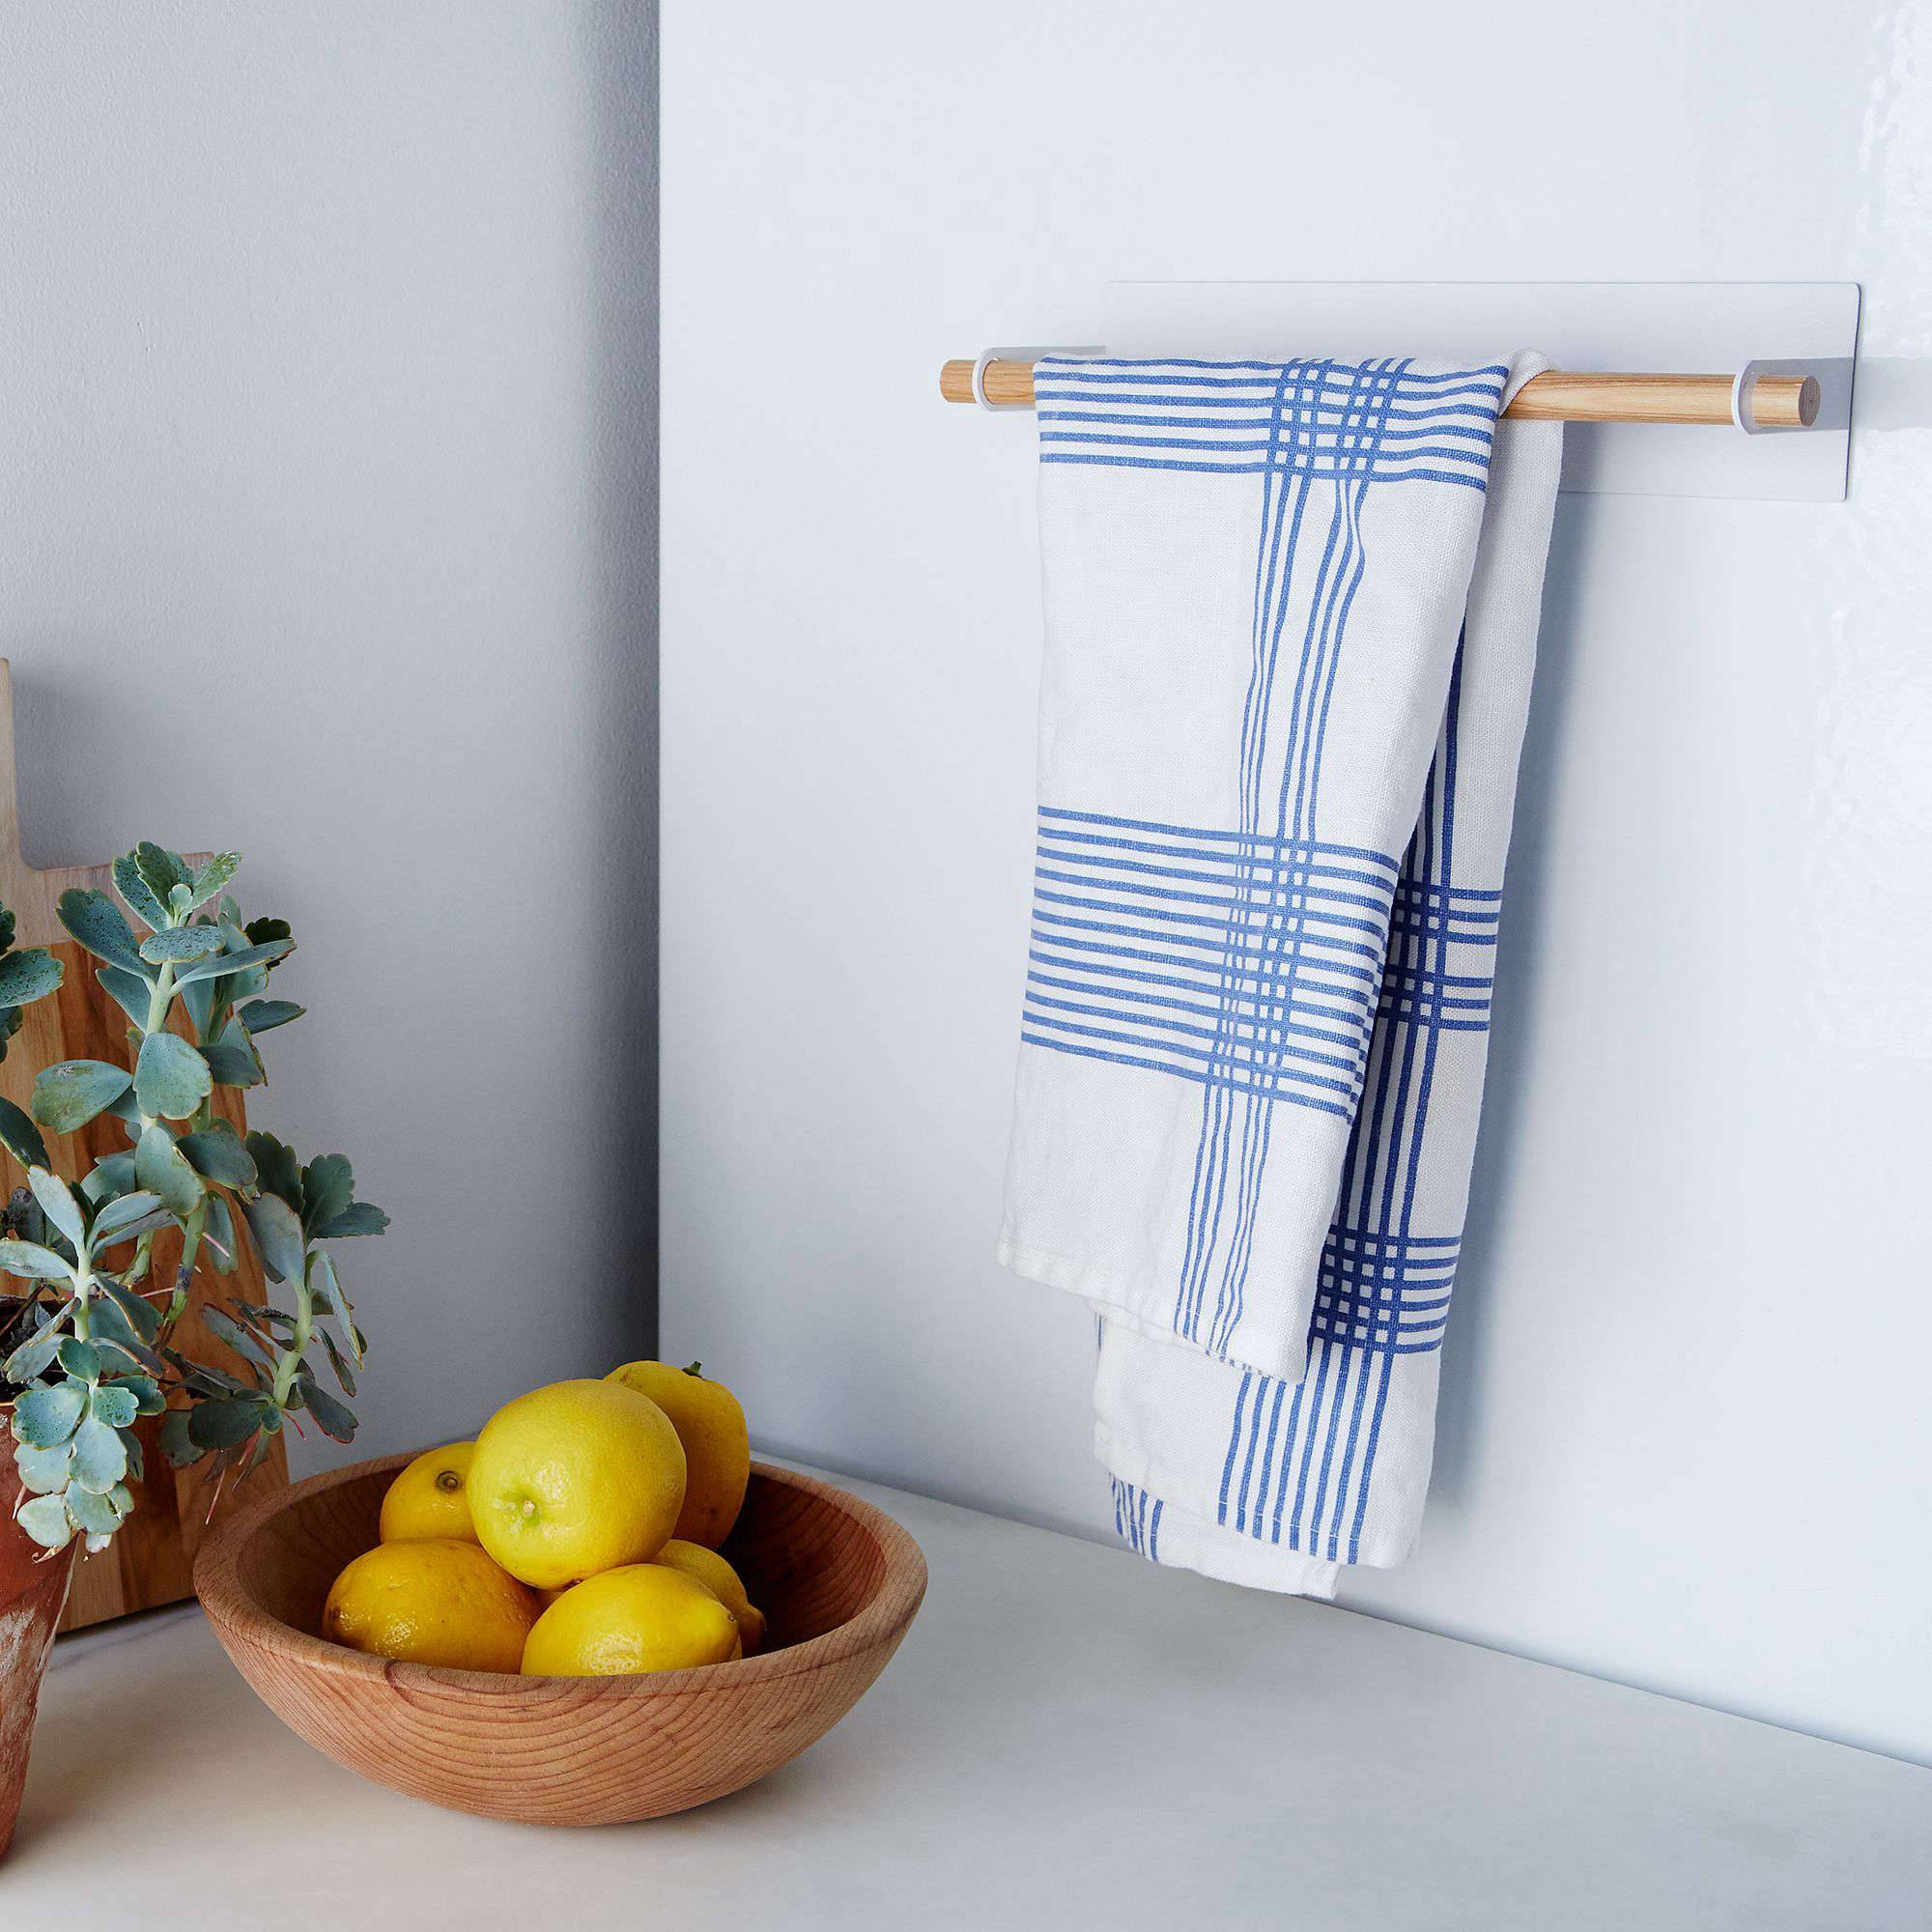 Кухонное полотенце своими руками: мастер-класс и идеи декора